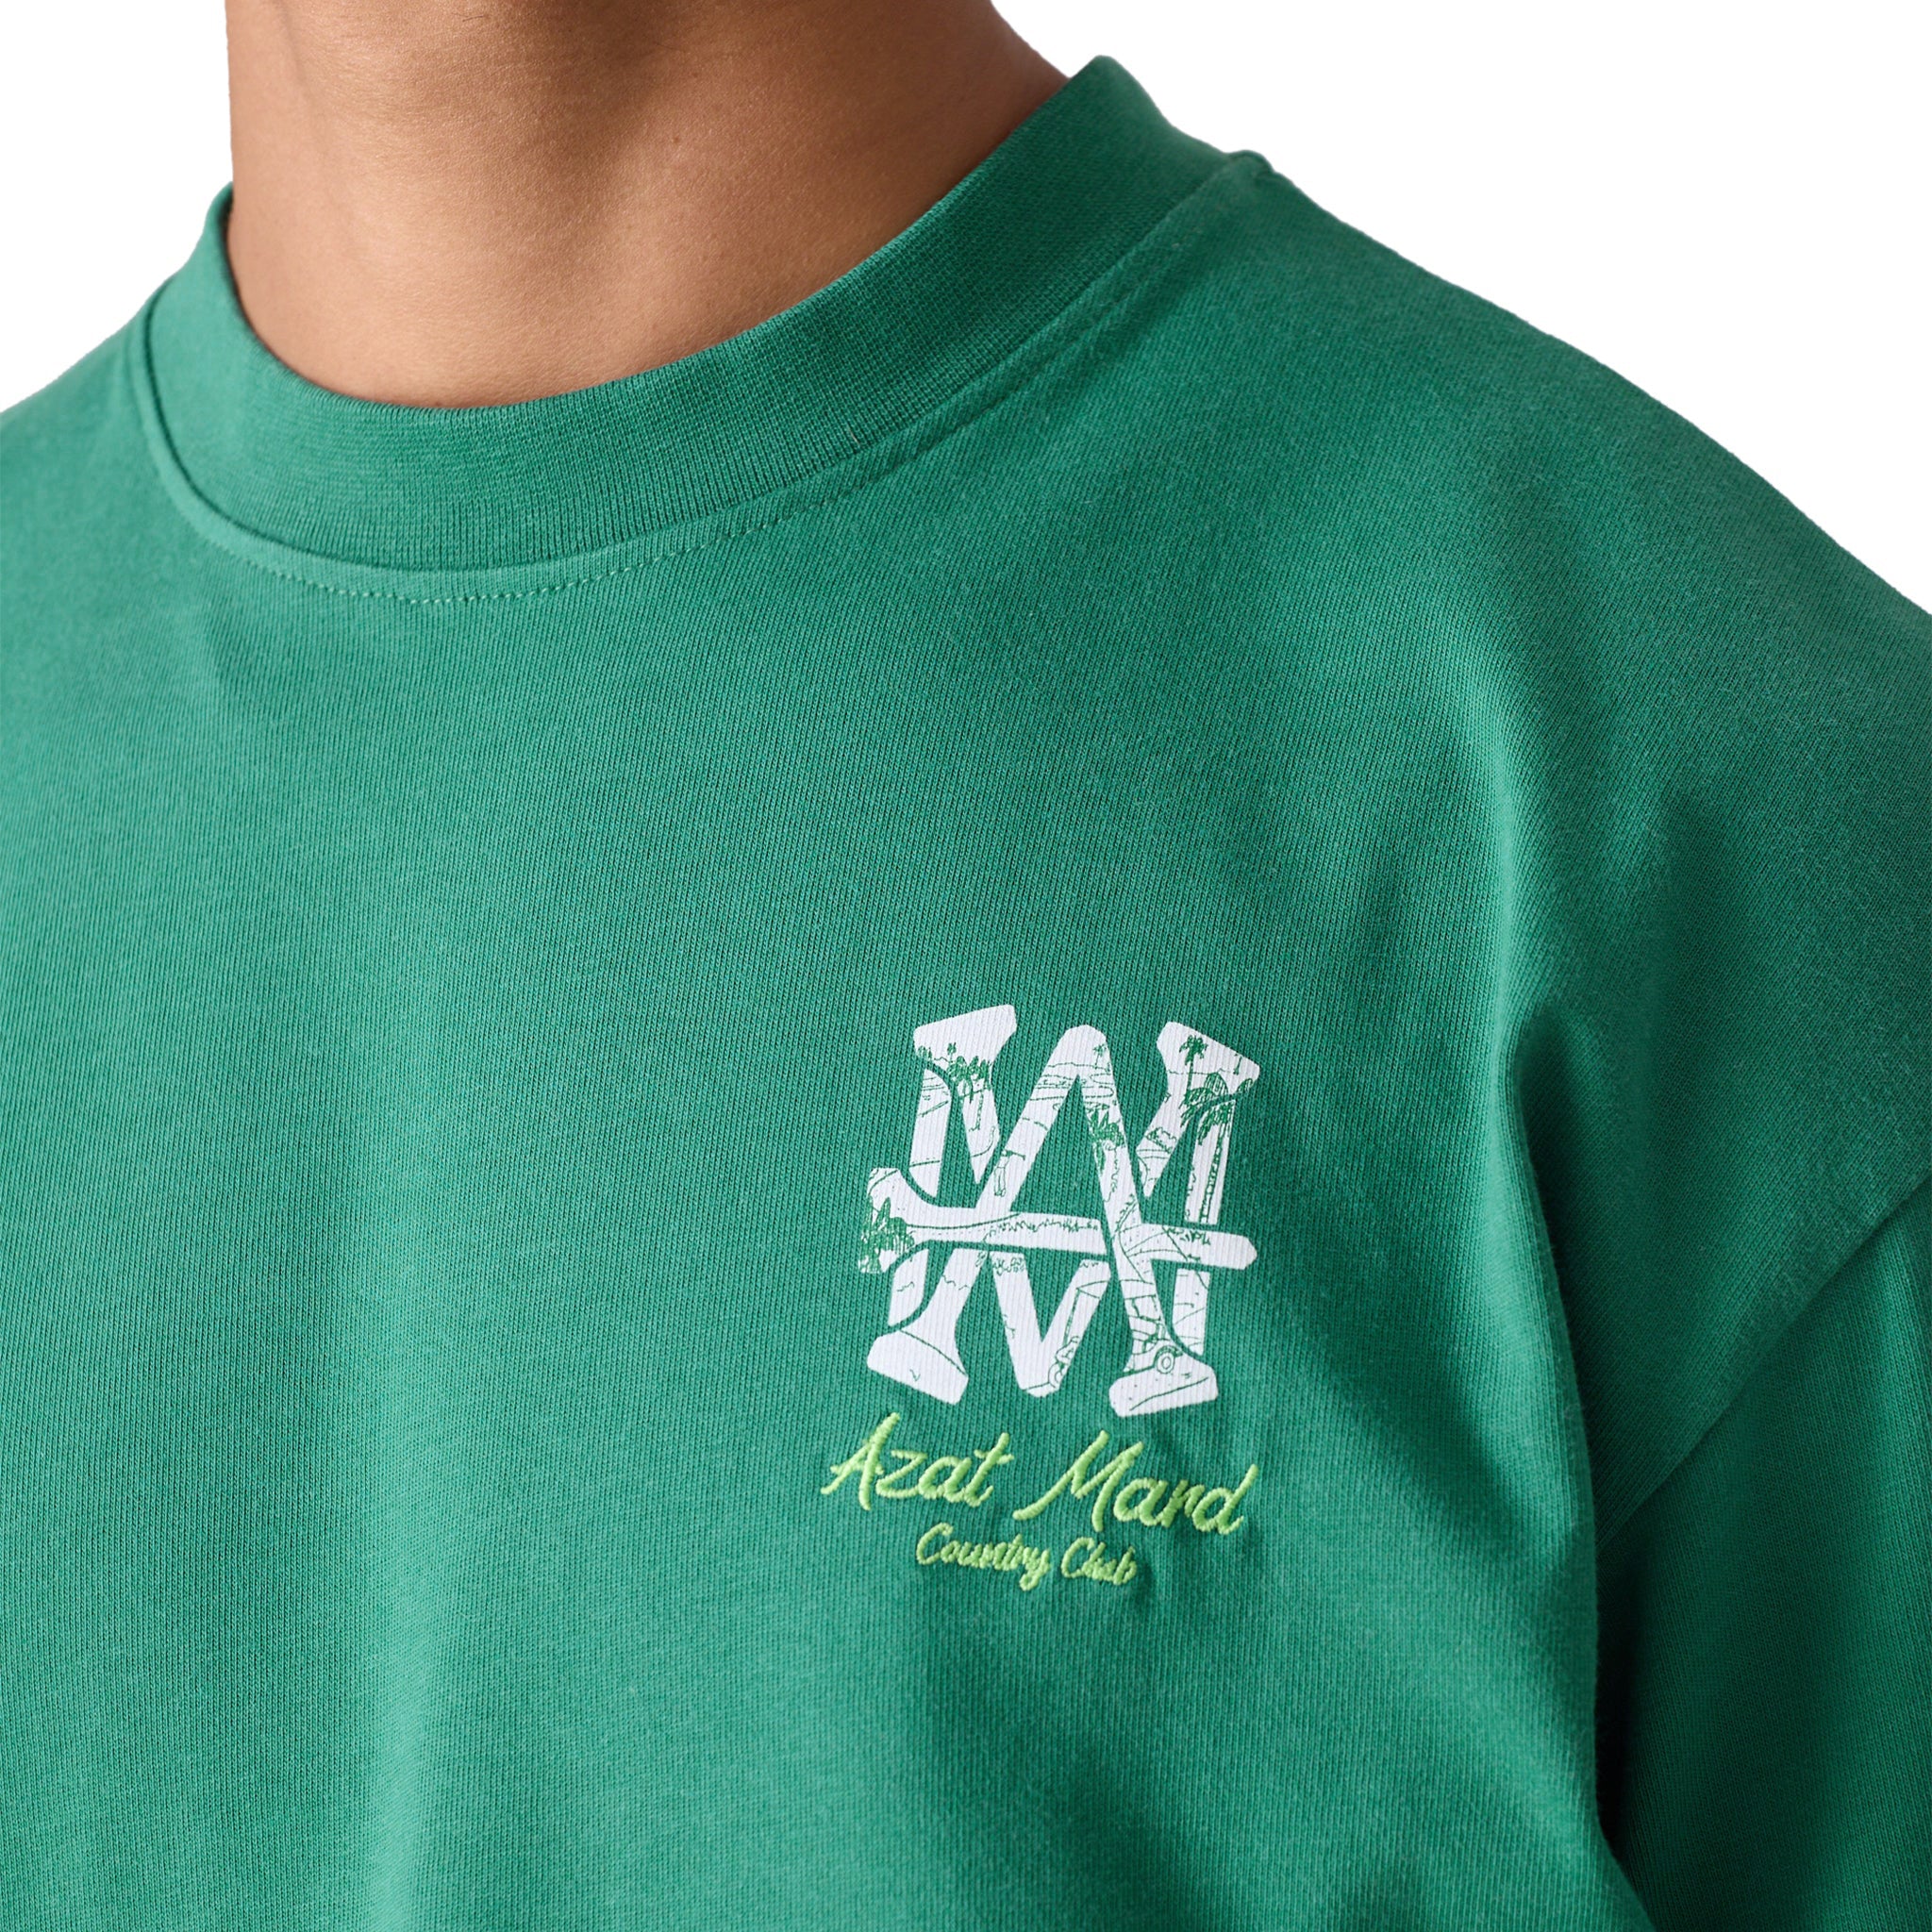 Azat Mard Country Club T Shirt Green SS23017